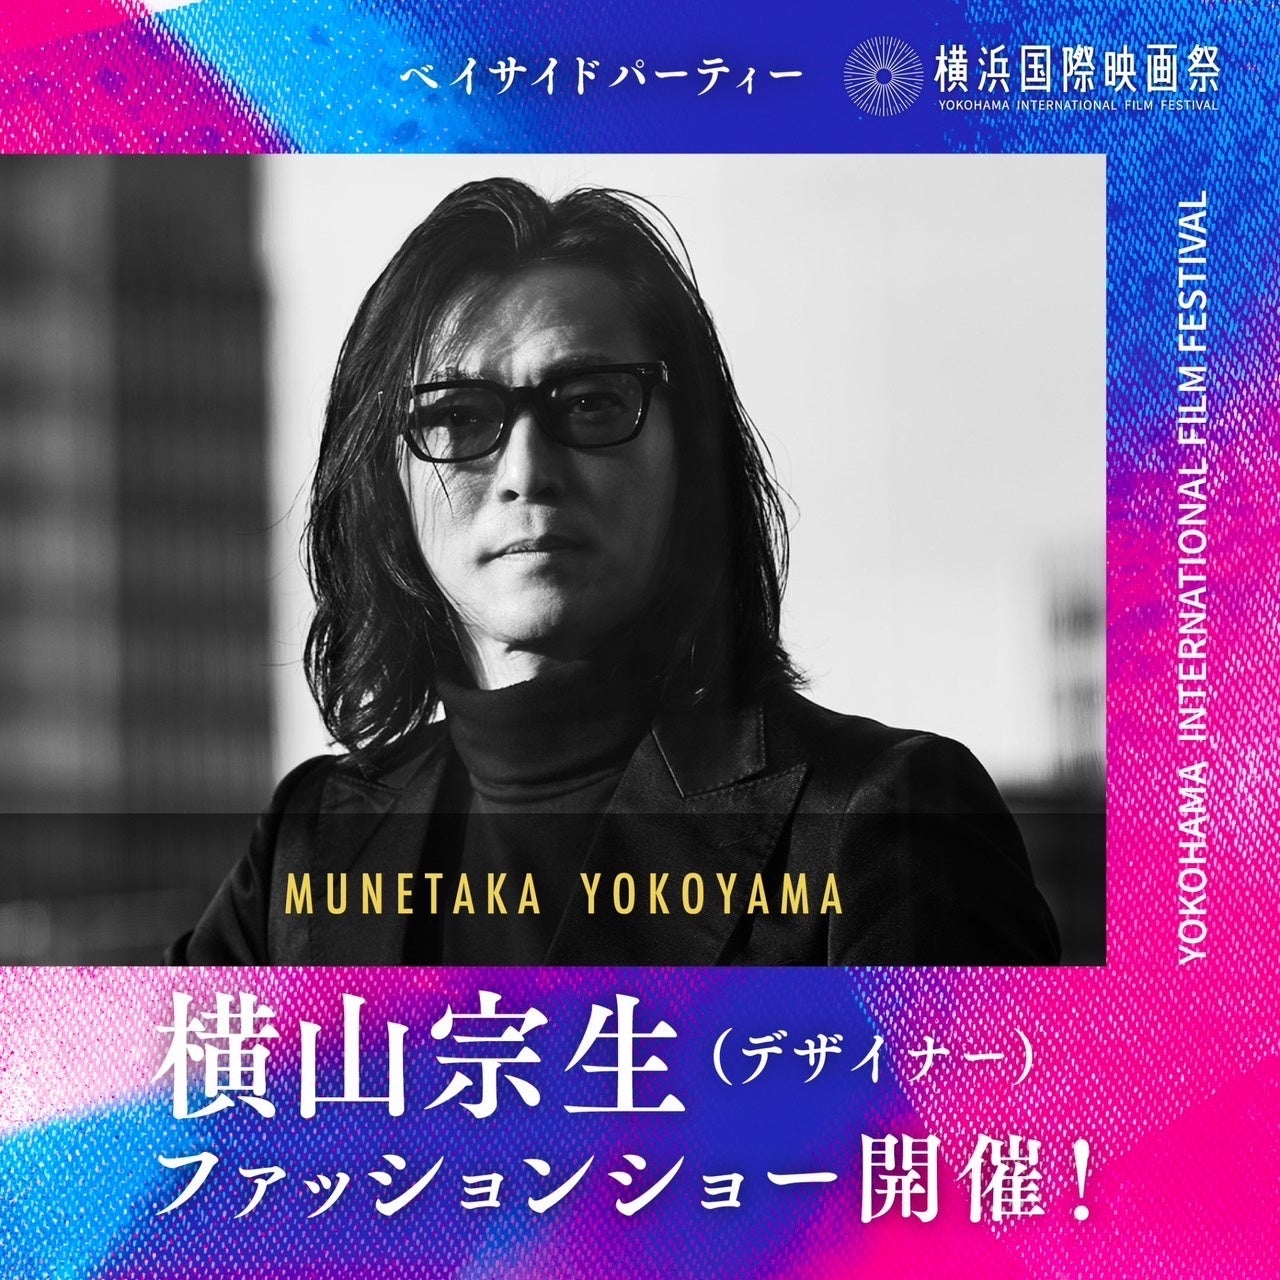 【MUNETAKA YOKOYAMA】5⽉5⽇(⽇) 第２回横浜国際映画祭のファッションショーでDJふぉい・岸明⽇⾹の出演決定！